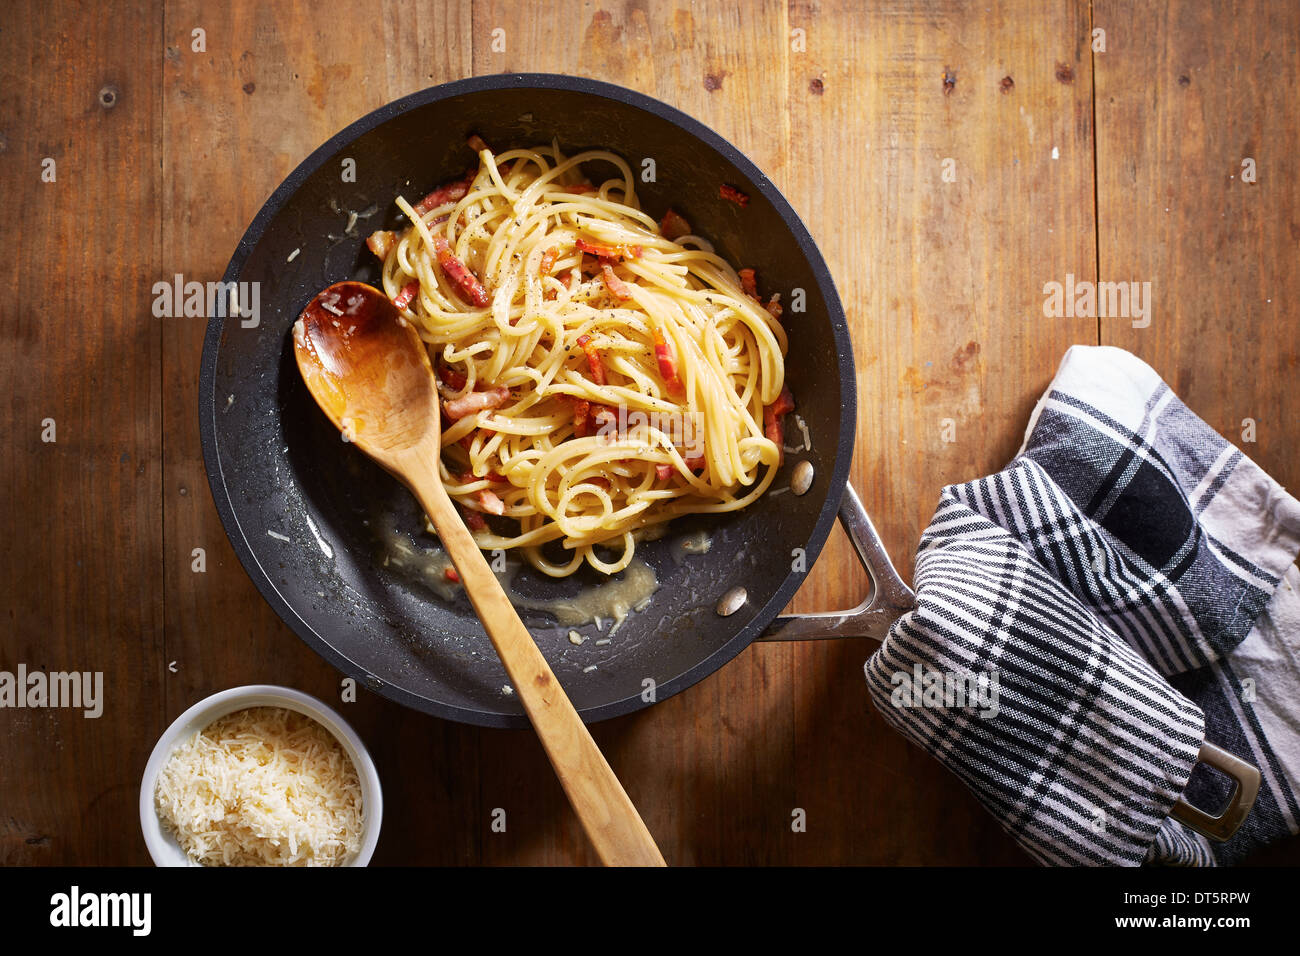 Making spaghetti a la carbonara overlook shot Stock Photo